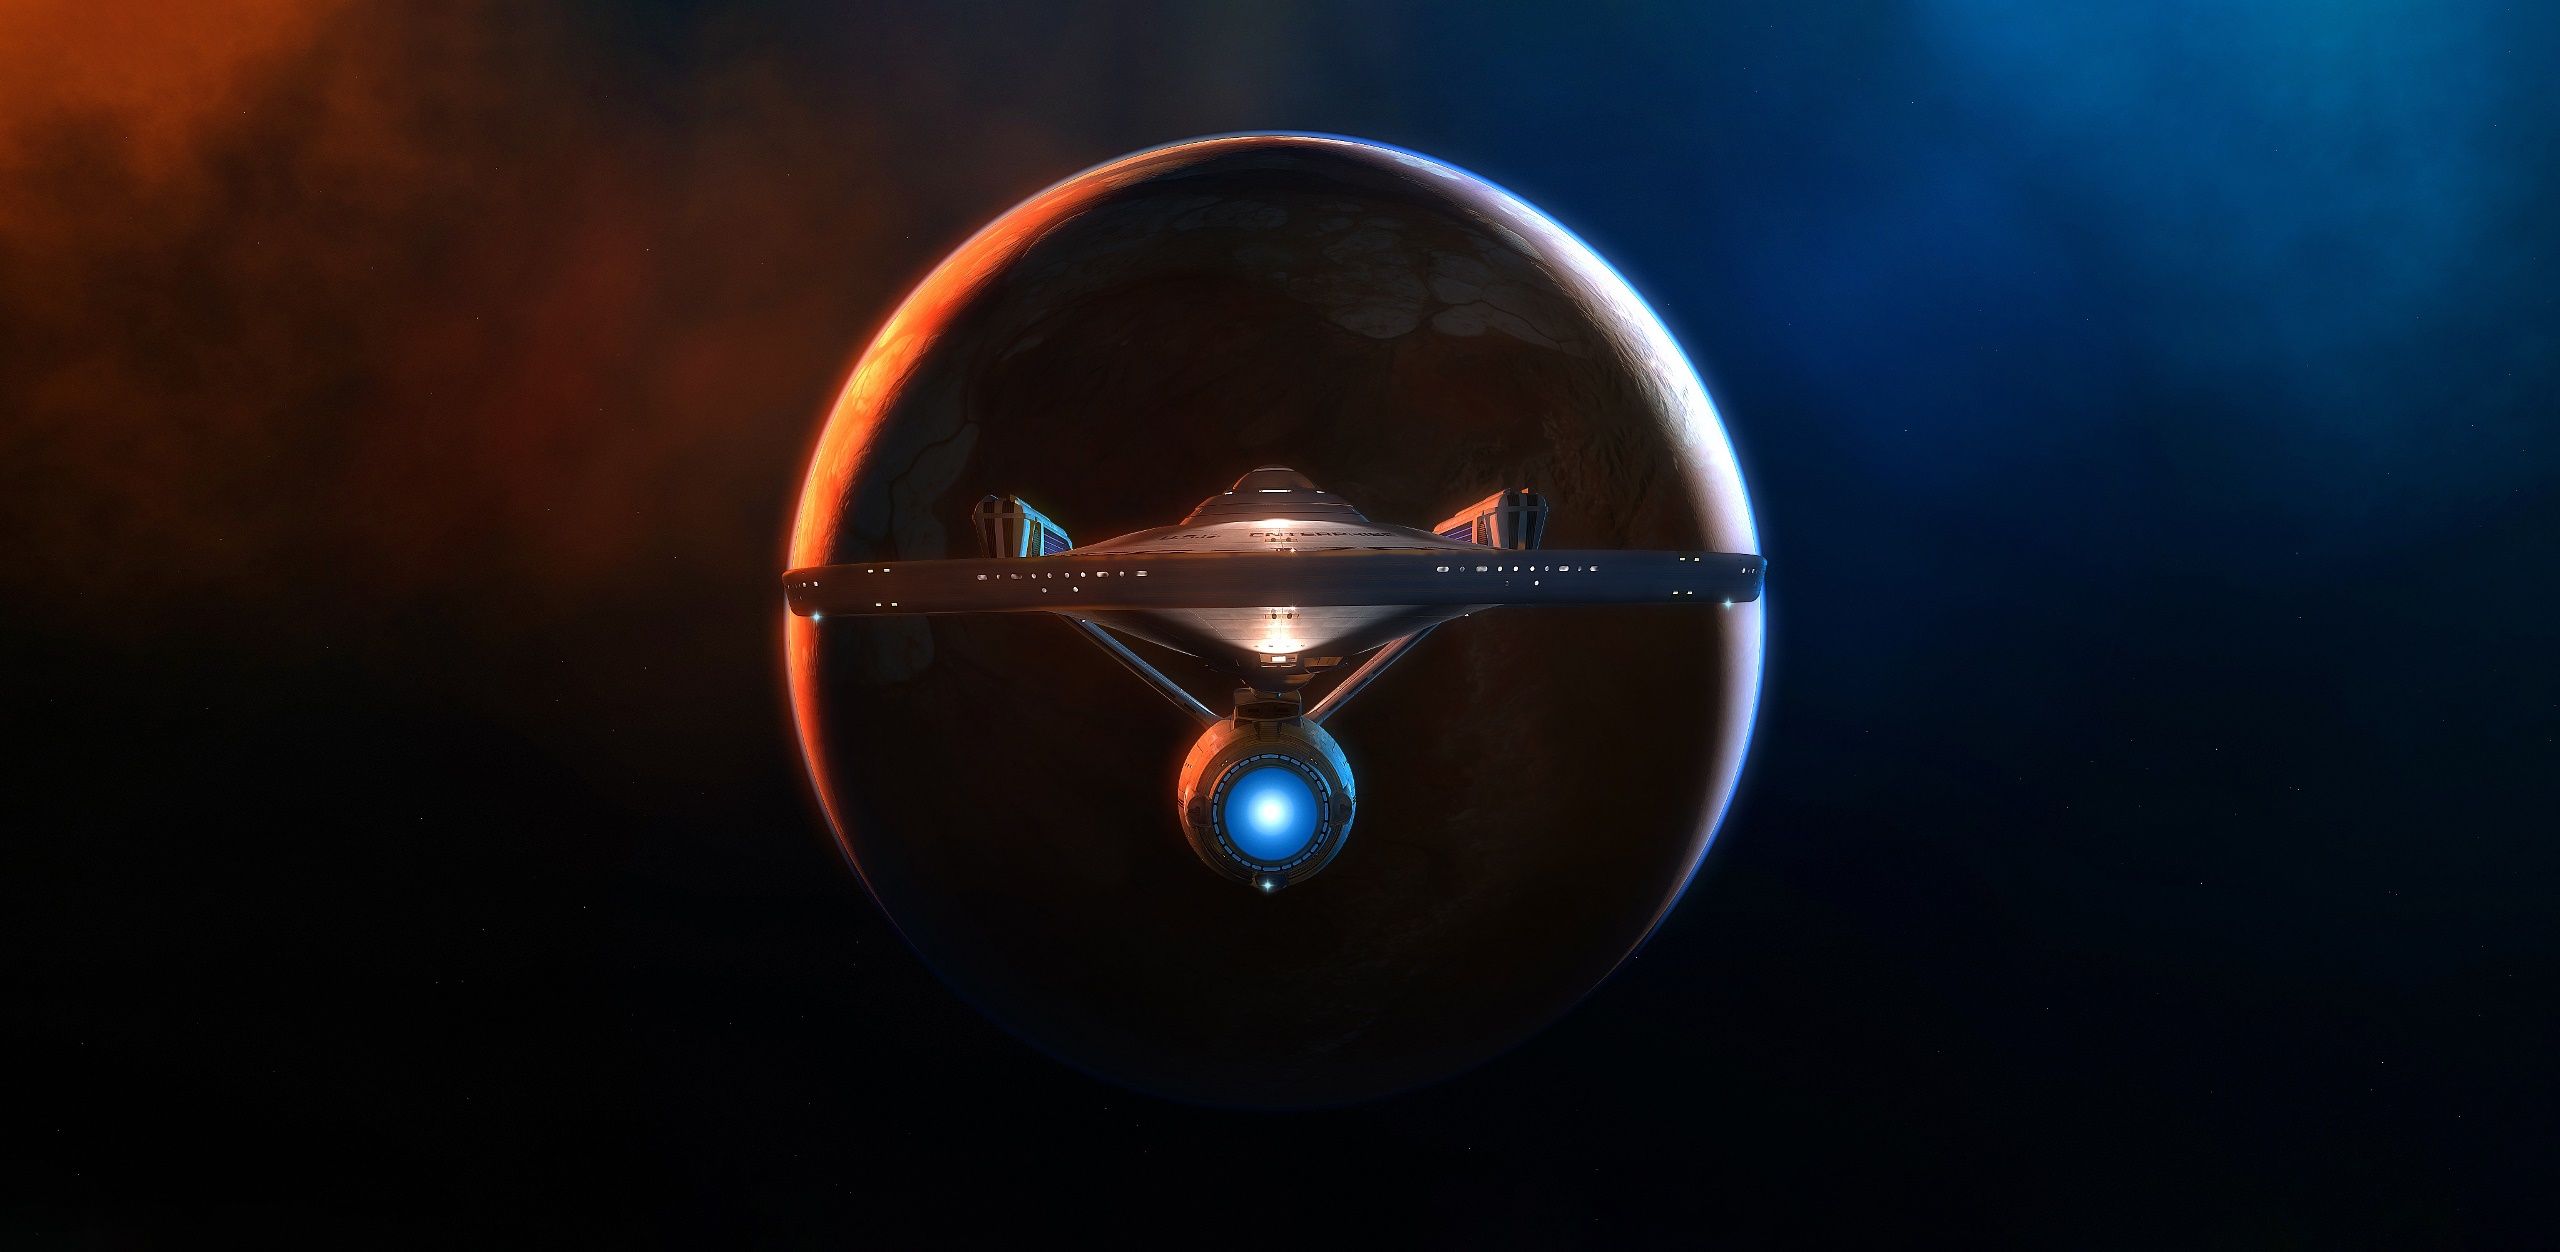 Spaceship USS Enterprise Spaceship Digital Art Science Fiction Star Trek 2560x1252